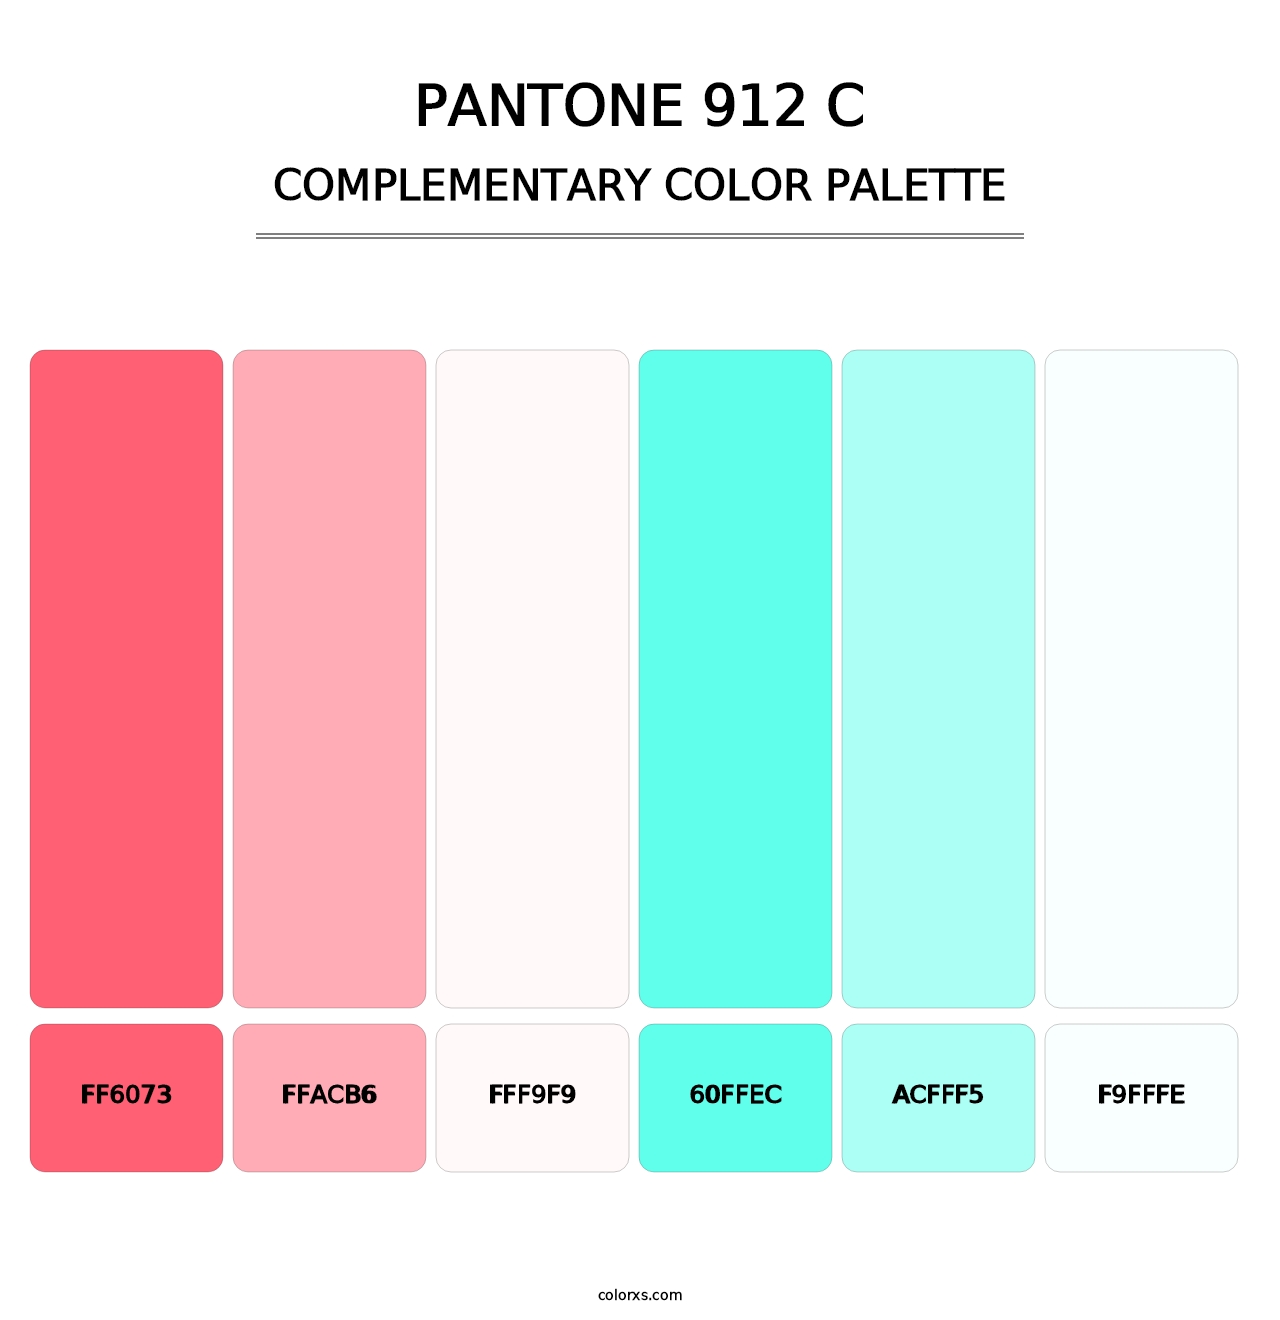 PANTONE 912 C - Complementary Color Palette